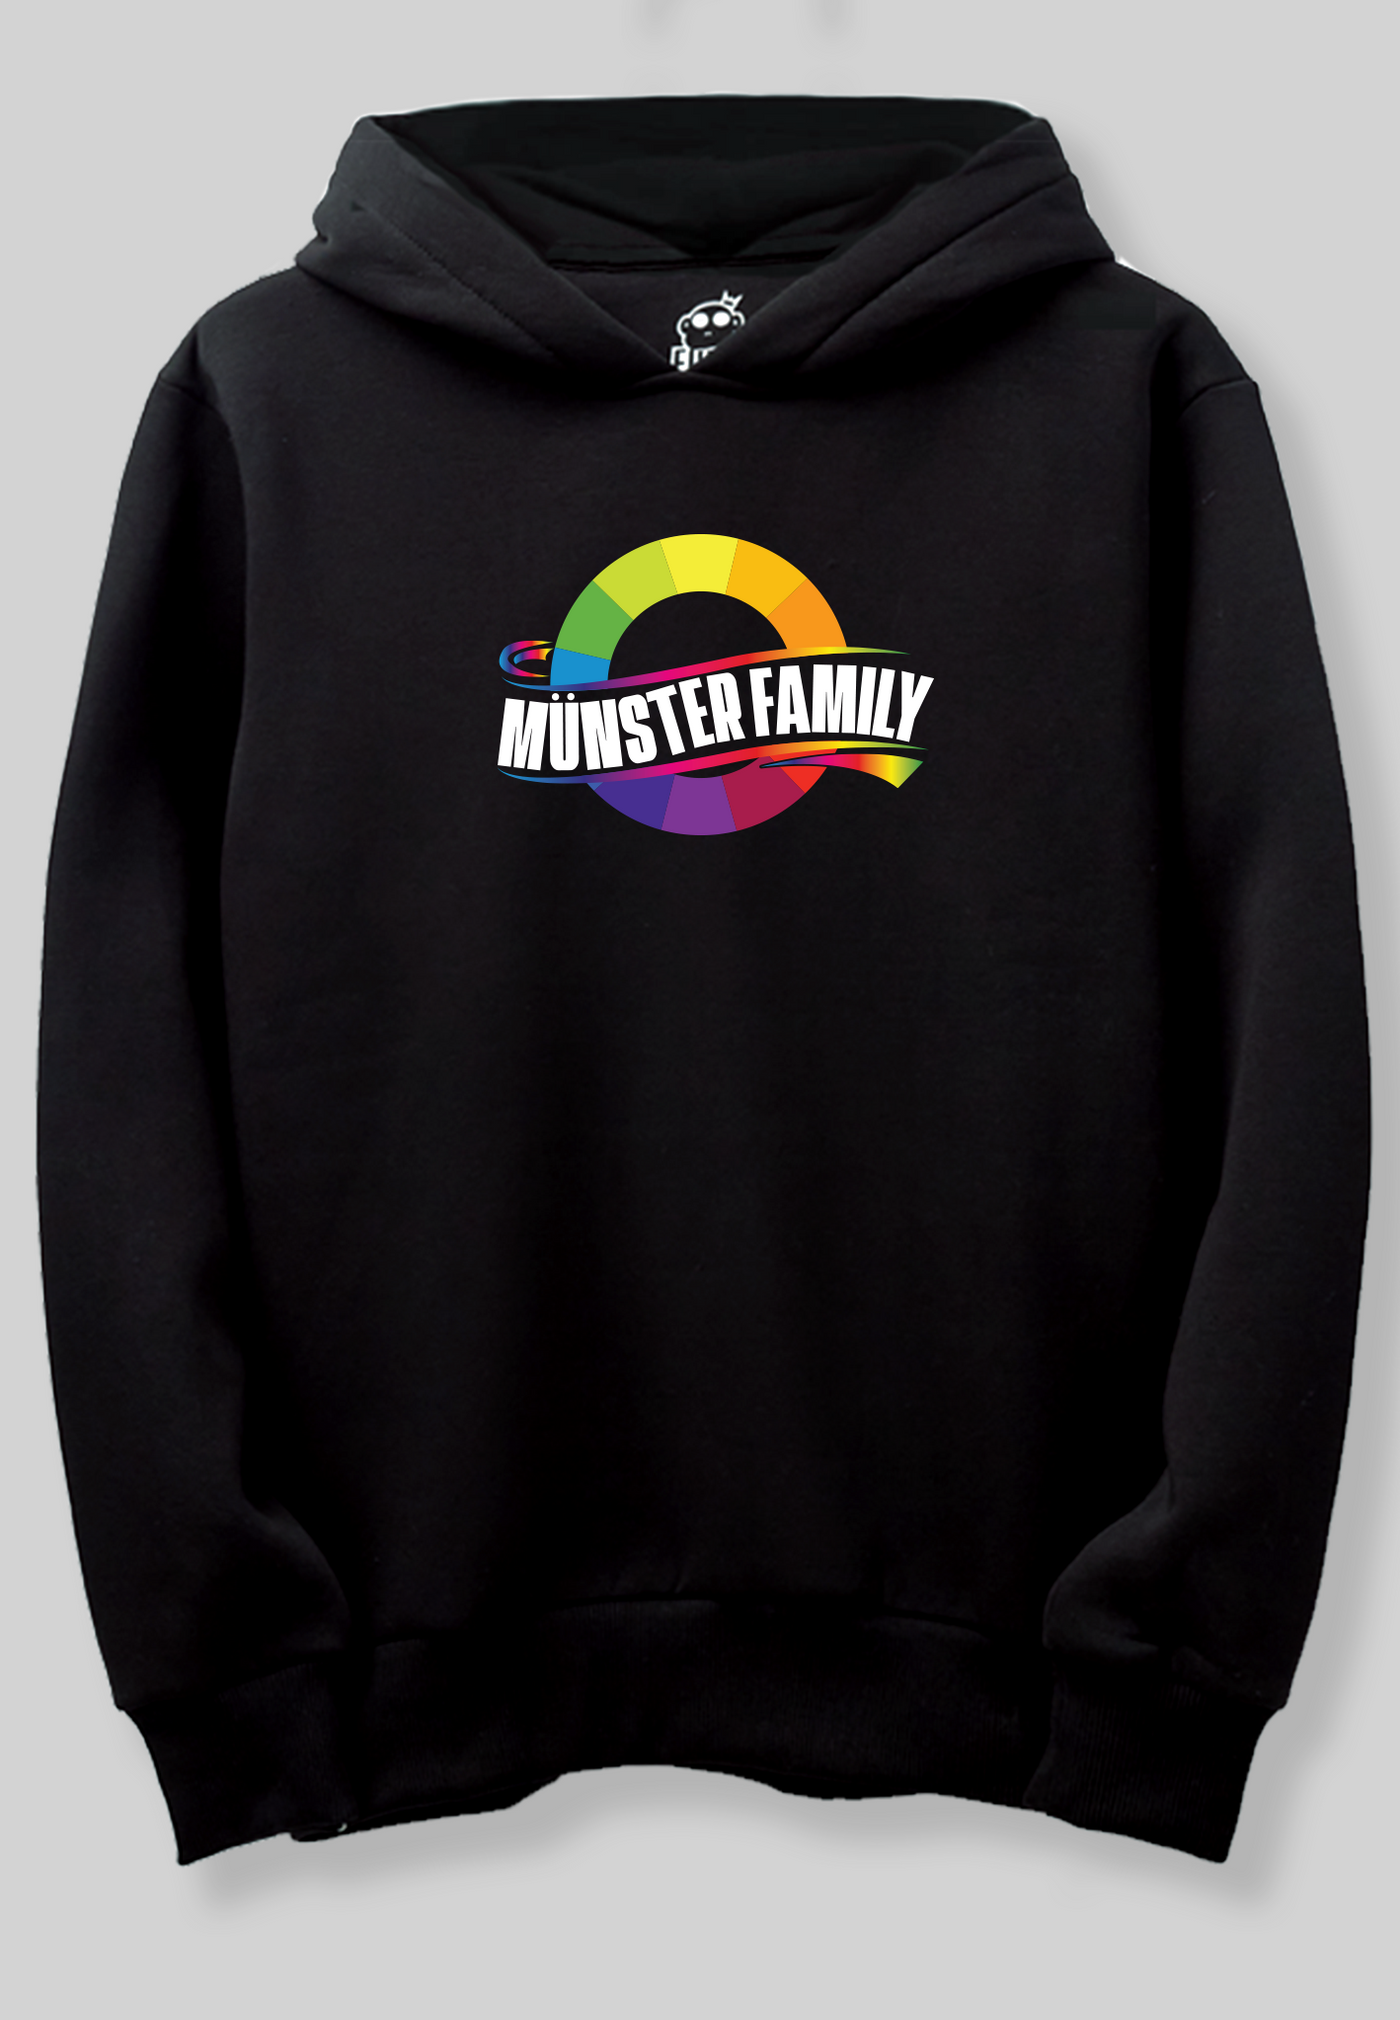 Familien Münster - Large logo - Black hoodie